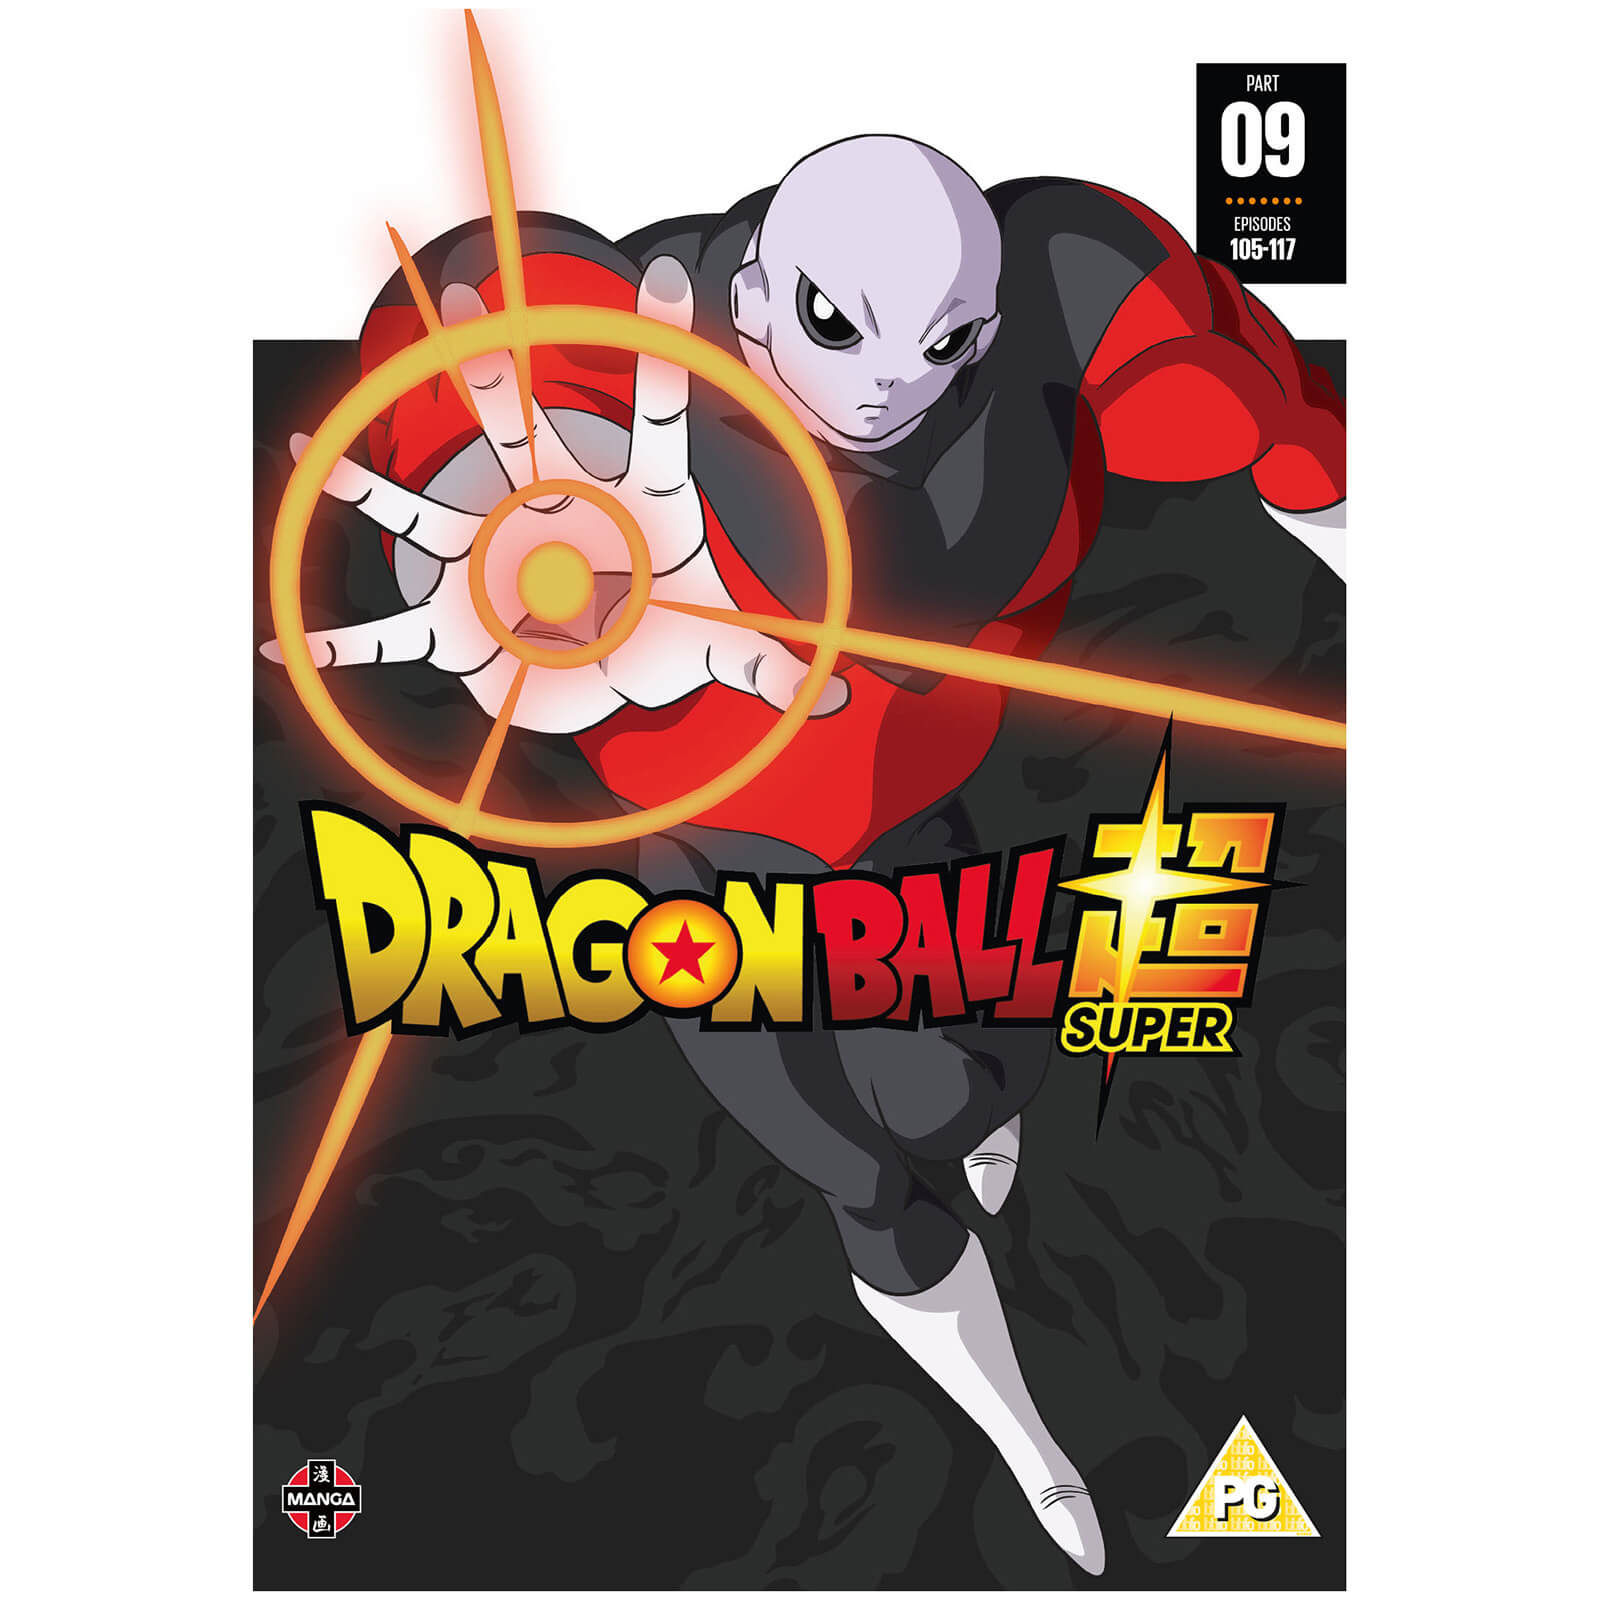 Dragon Ball Super Part 9 (Episodes 105-117) product